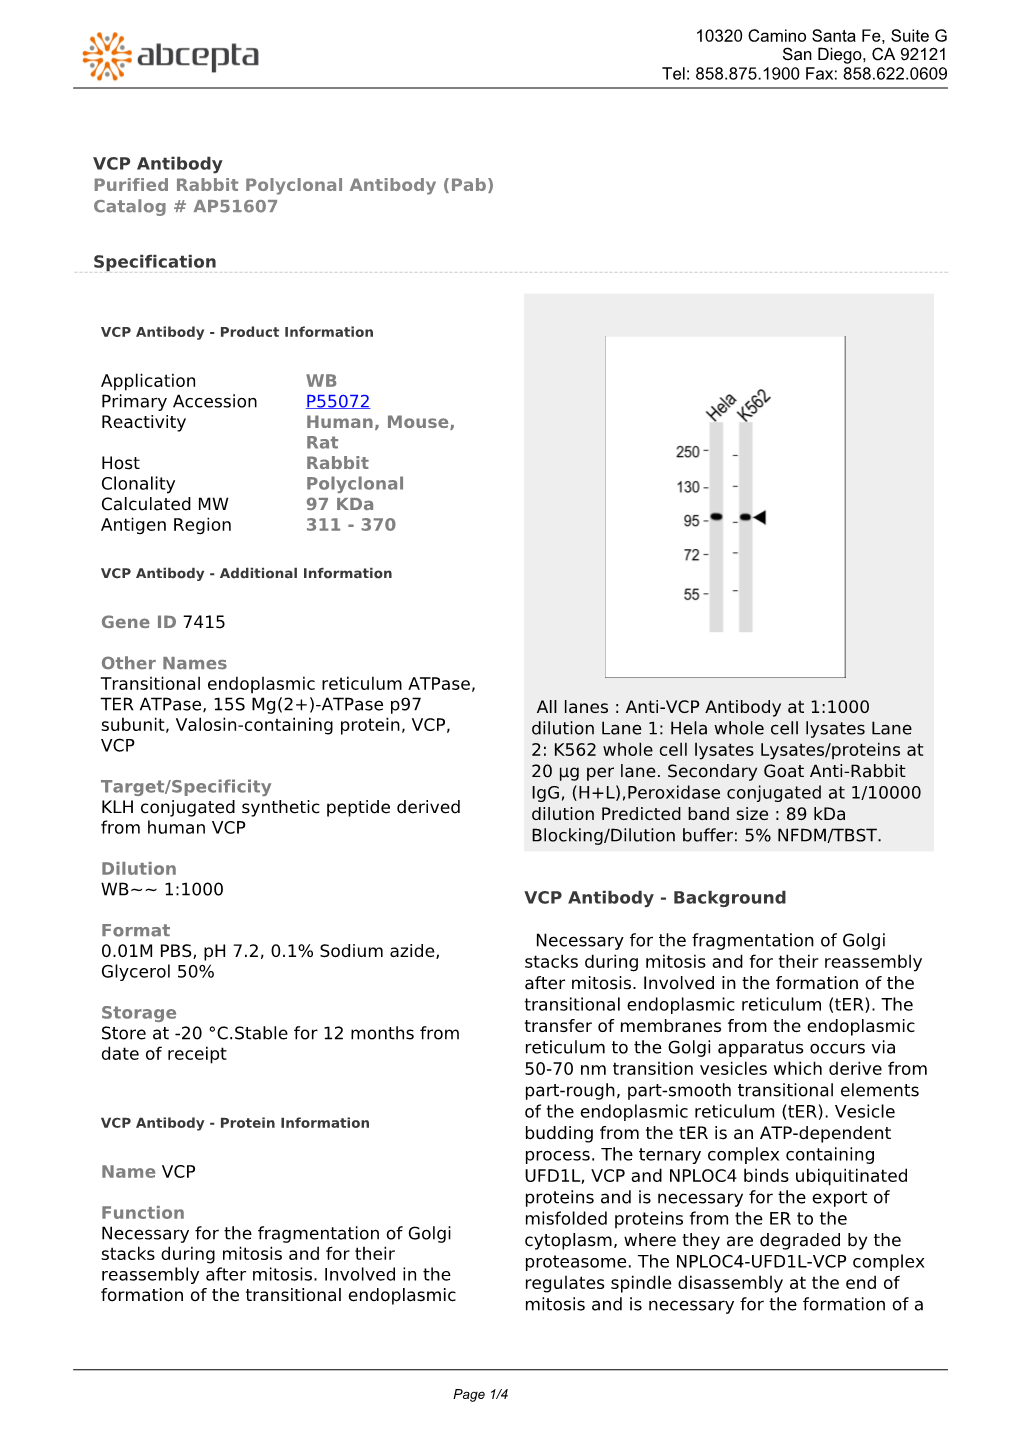 VCP Antibody Purified Rabbit Polyclonal Antibody (Pab) Catalog # AP51607